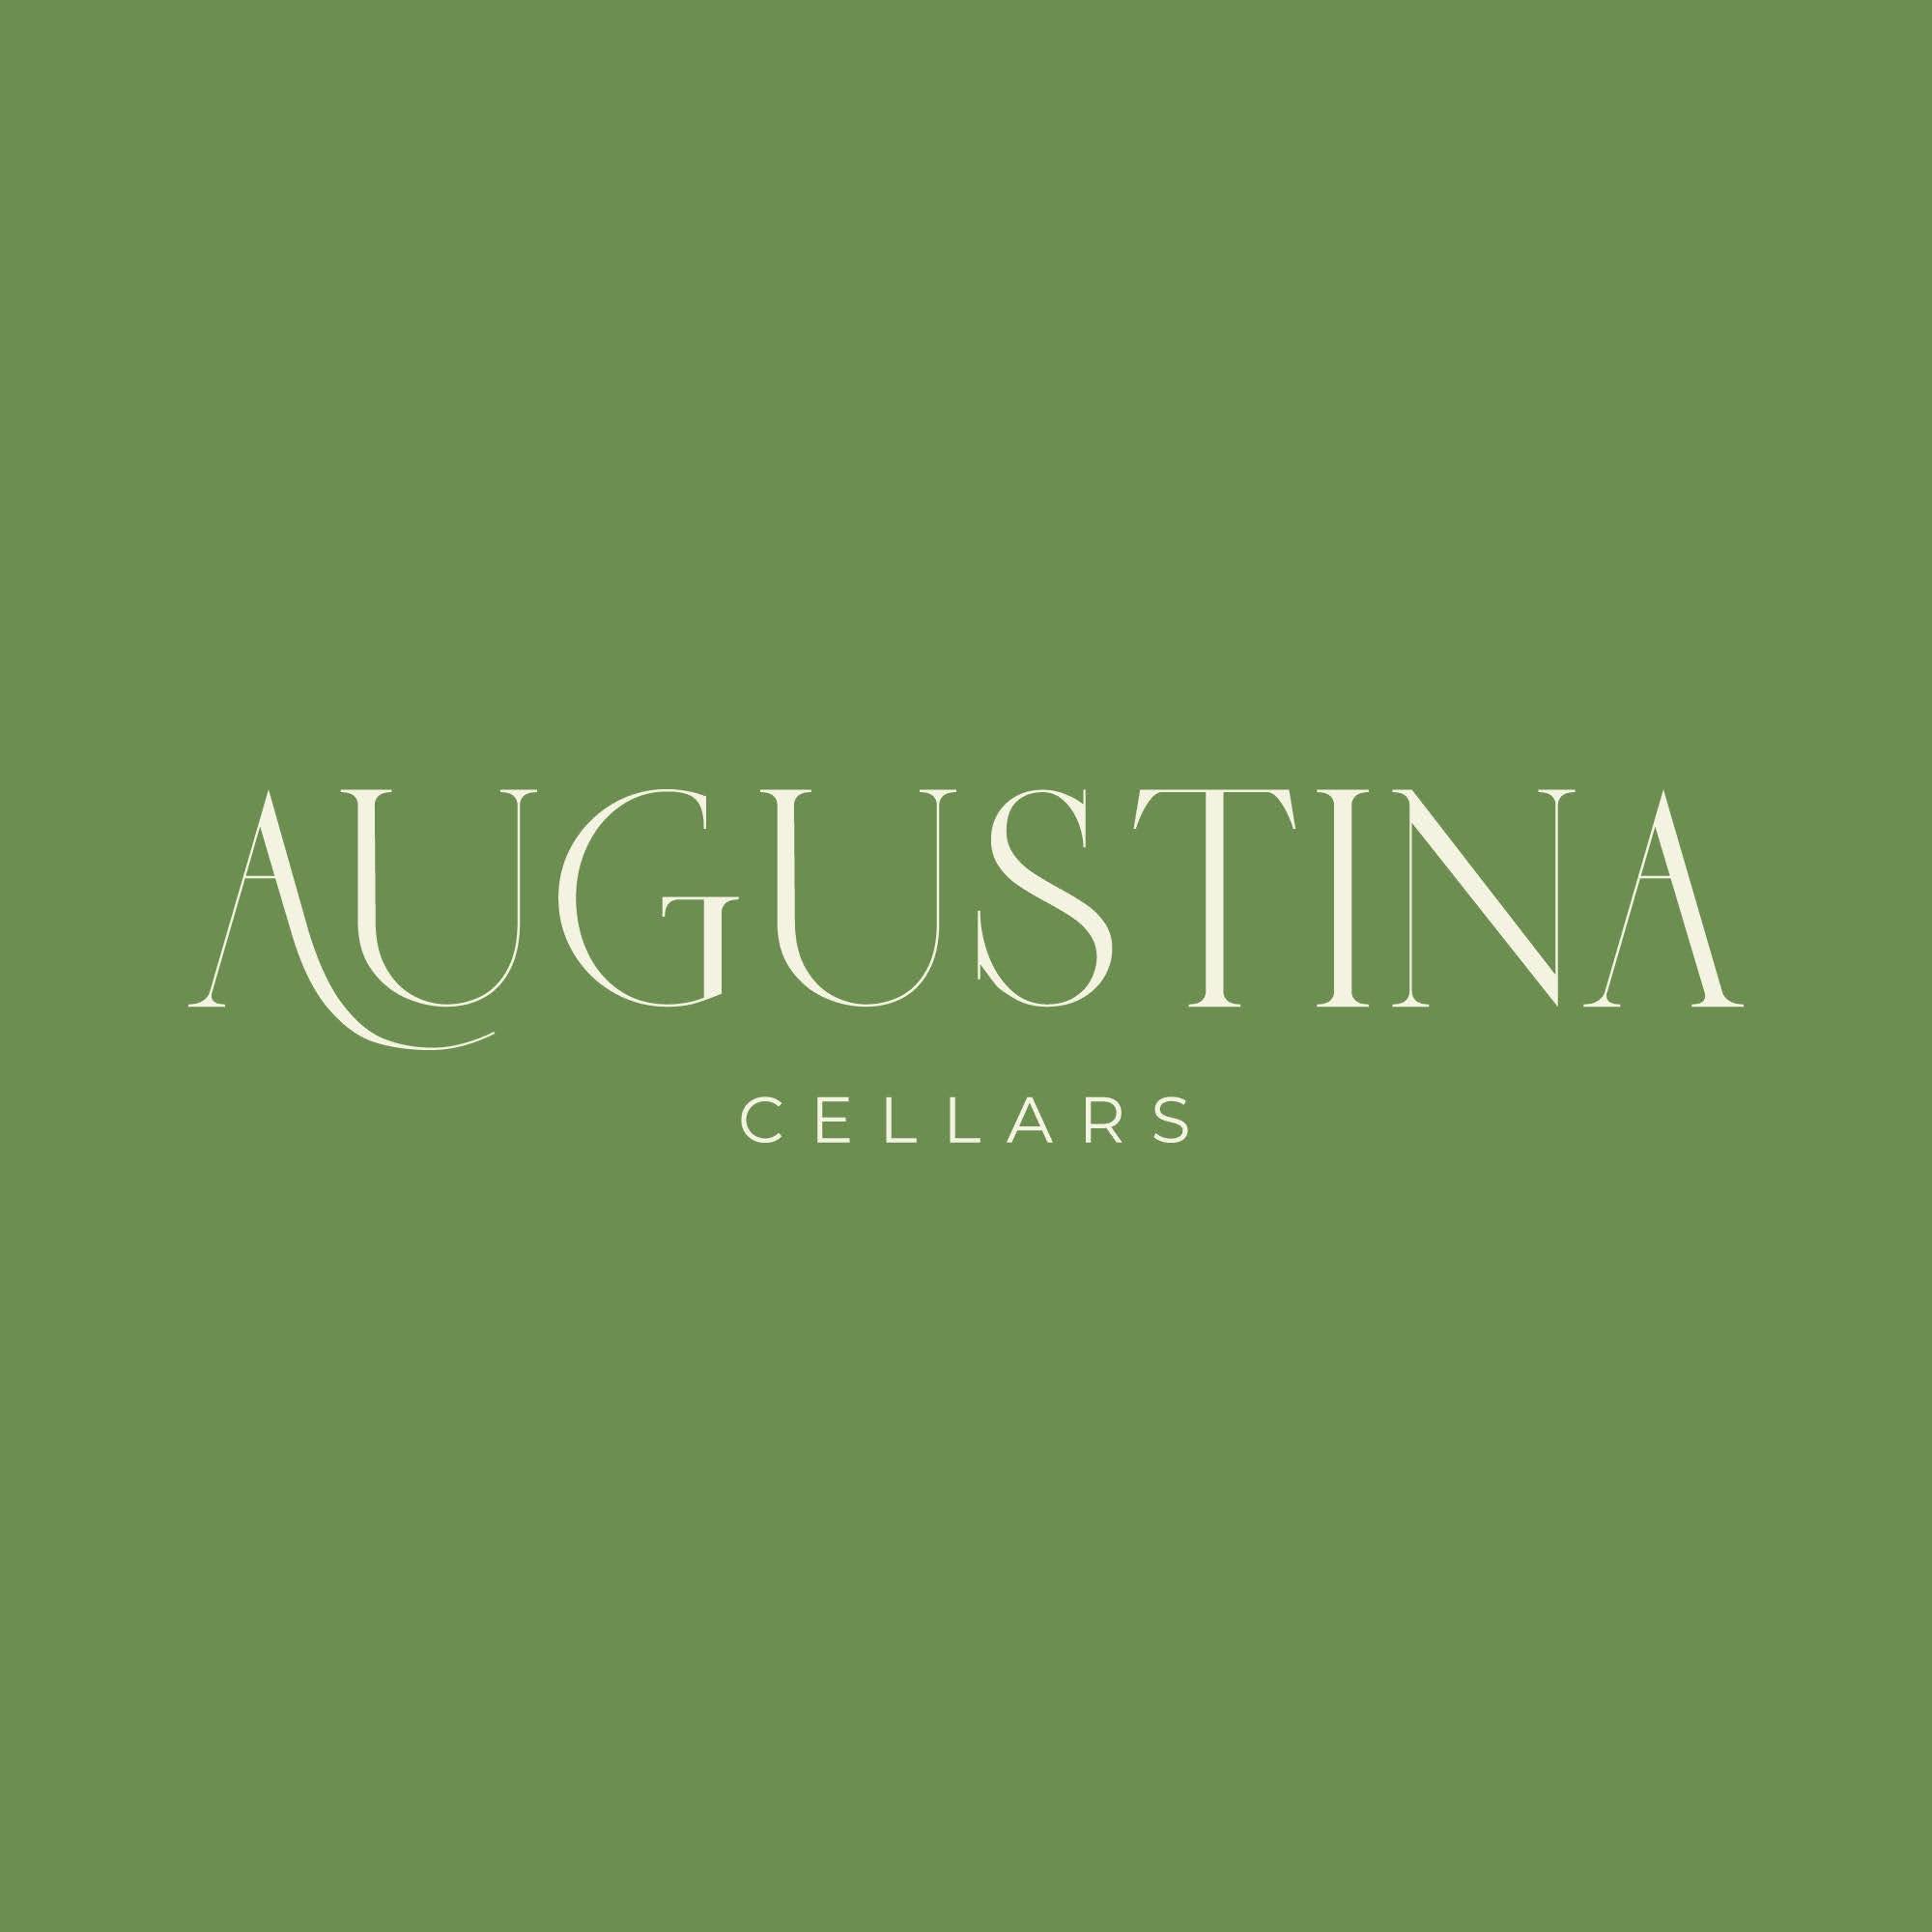 Augustina Cellars